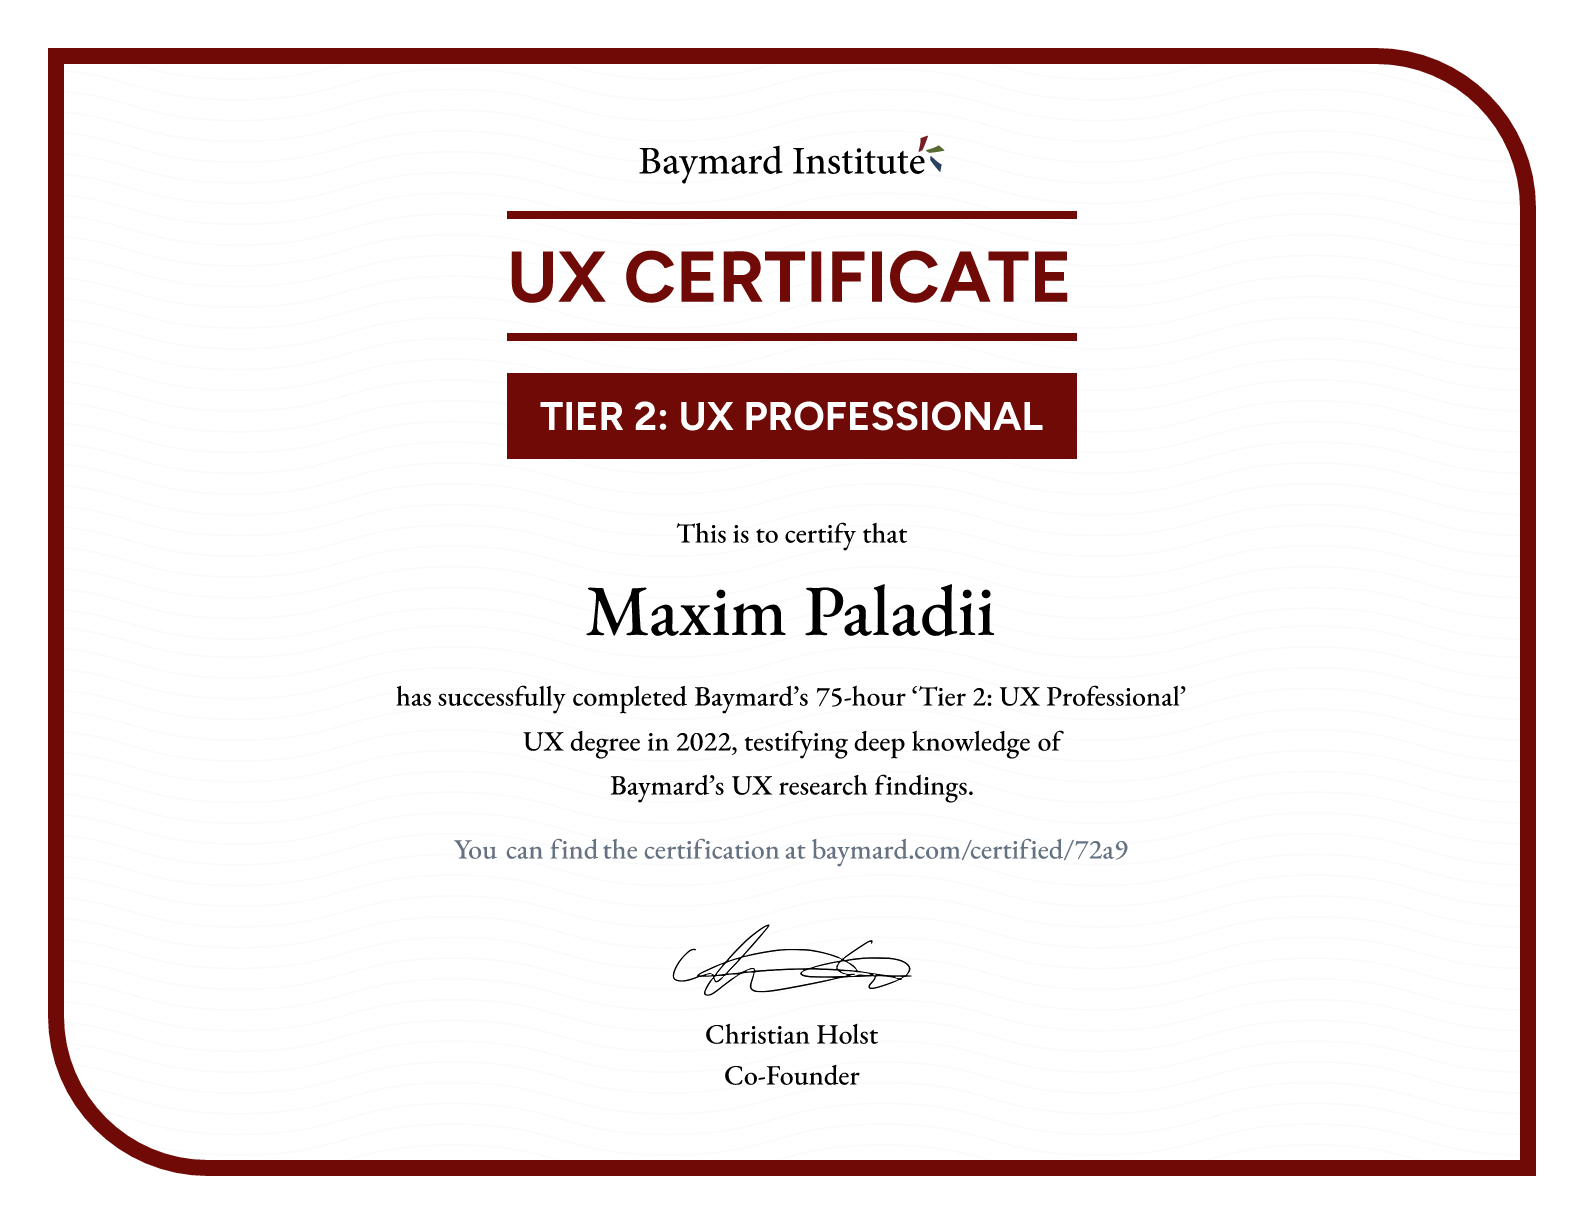 Maxim Paladii’s certificate